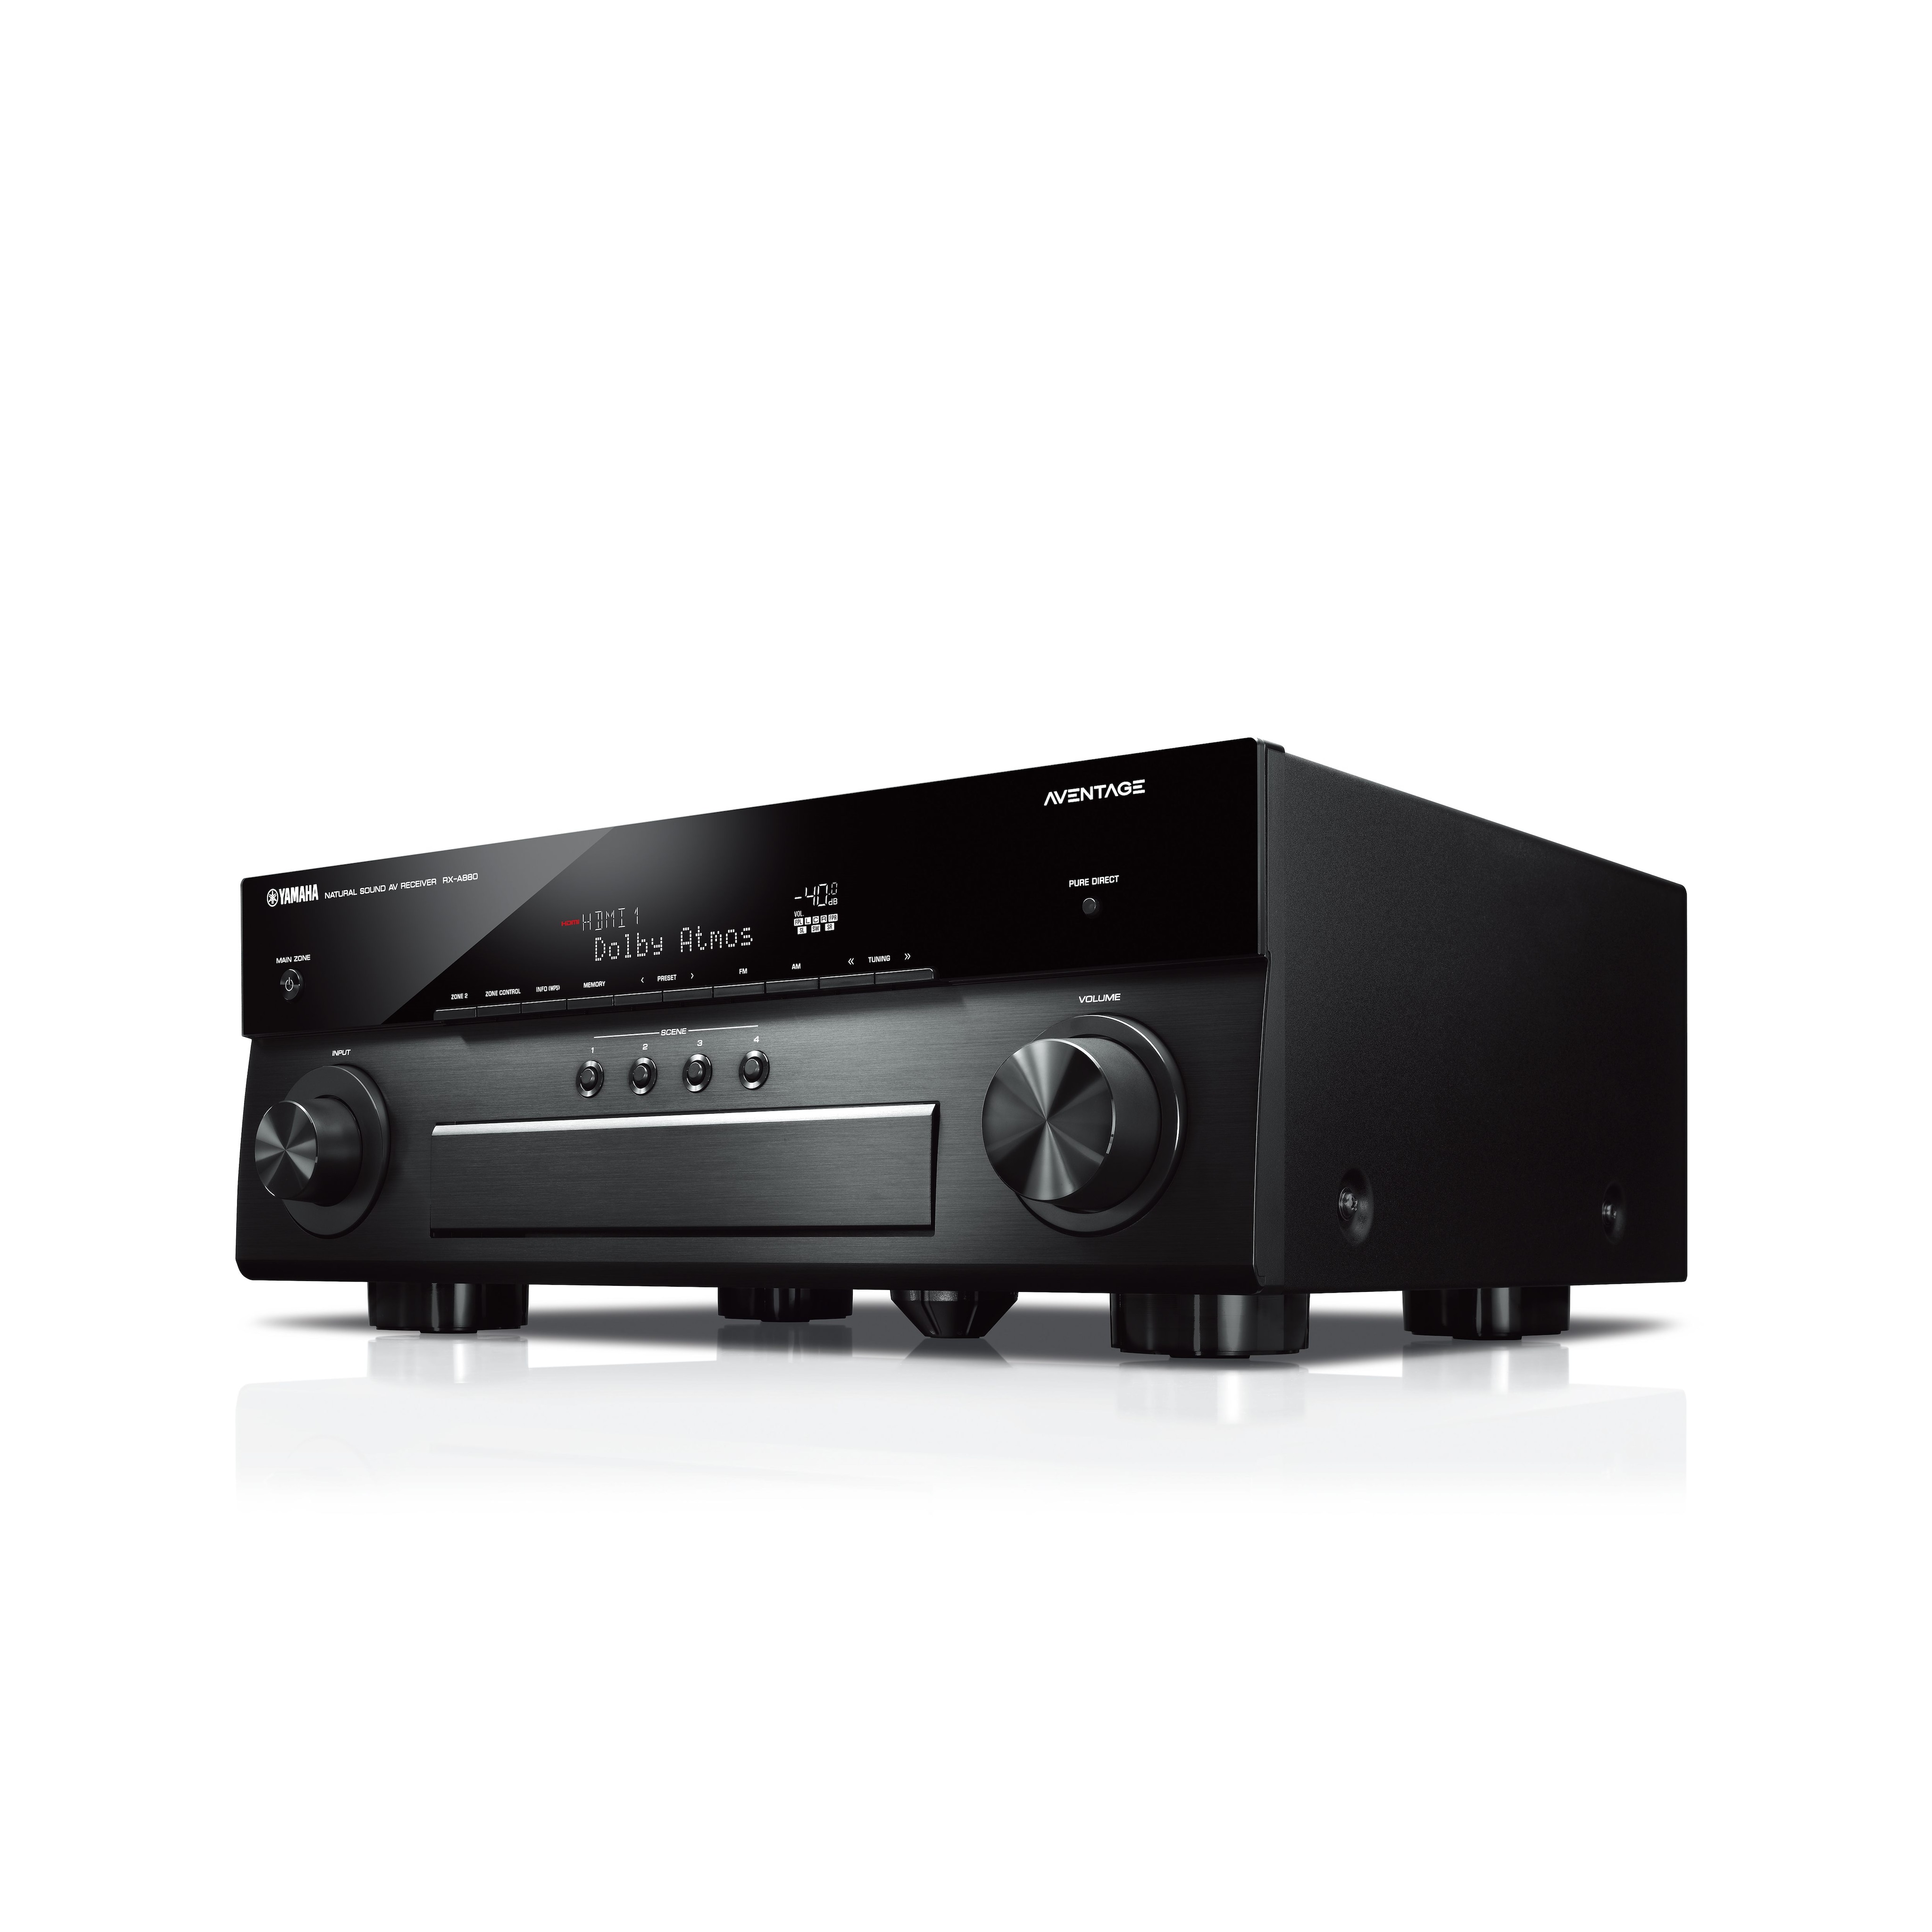 RX-A880 - Funktionen - AV-Receiver - Audio & Video - Produkte ...